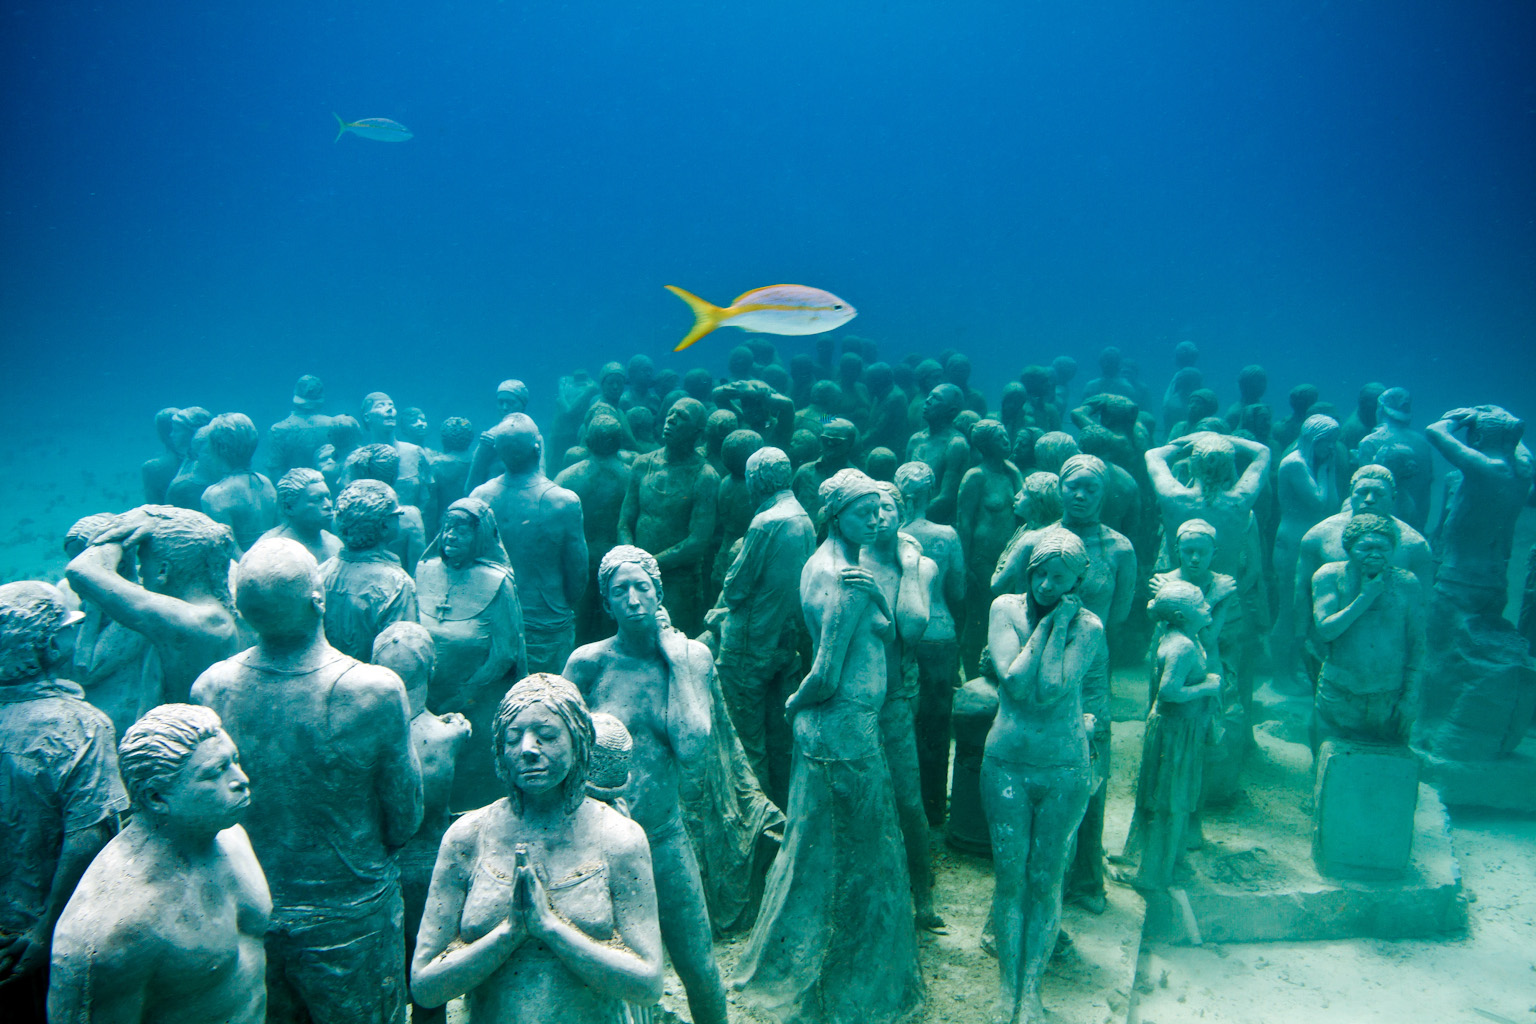 Musa underwater museum activity in Cancun